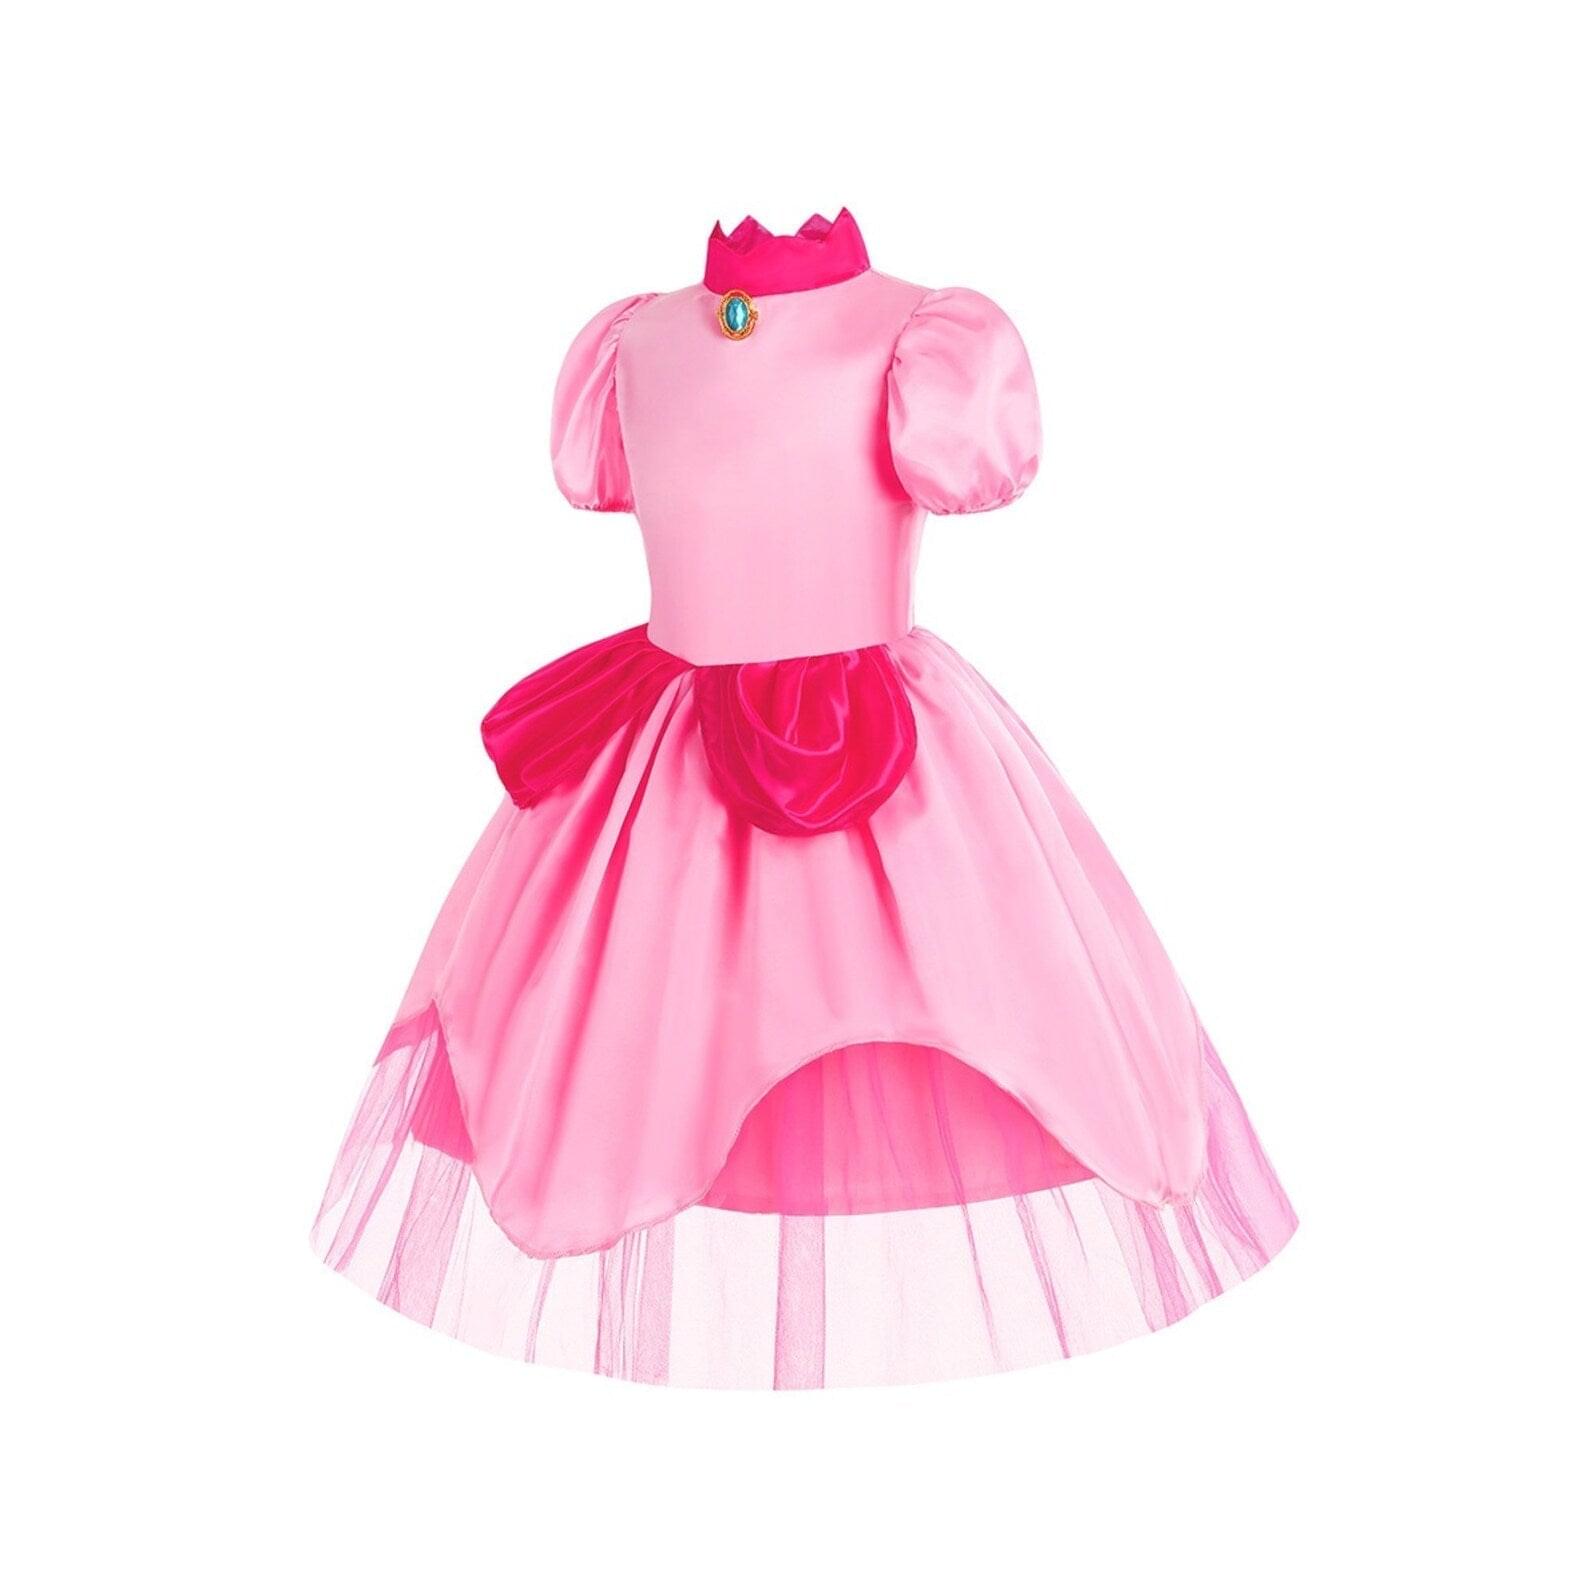 Disney-Inspired Mario Bros Princess Peach Dress, Perfect for Halloween and Birthdays